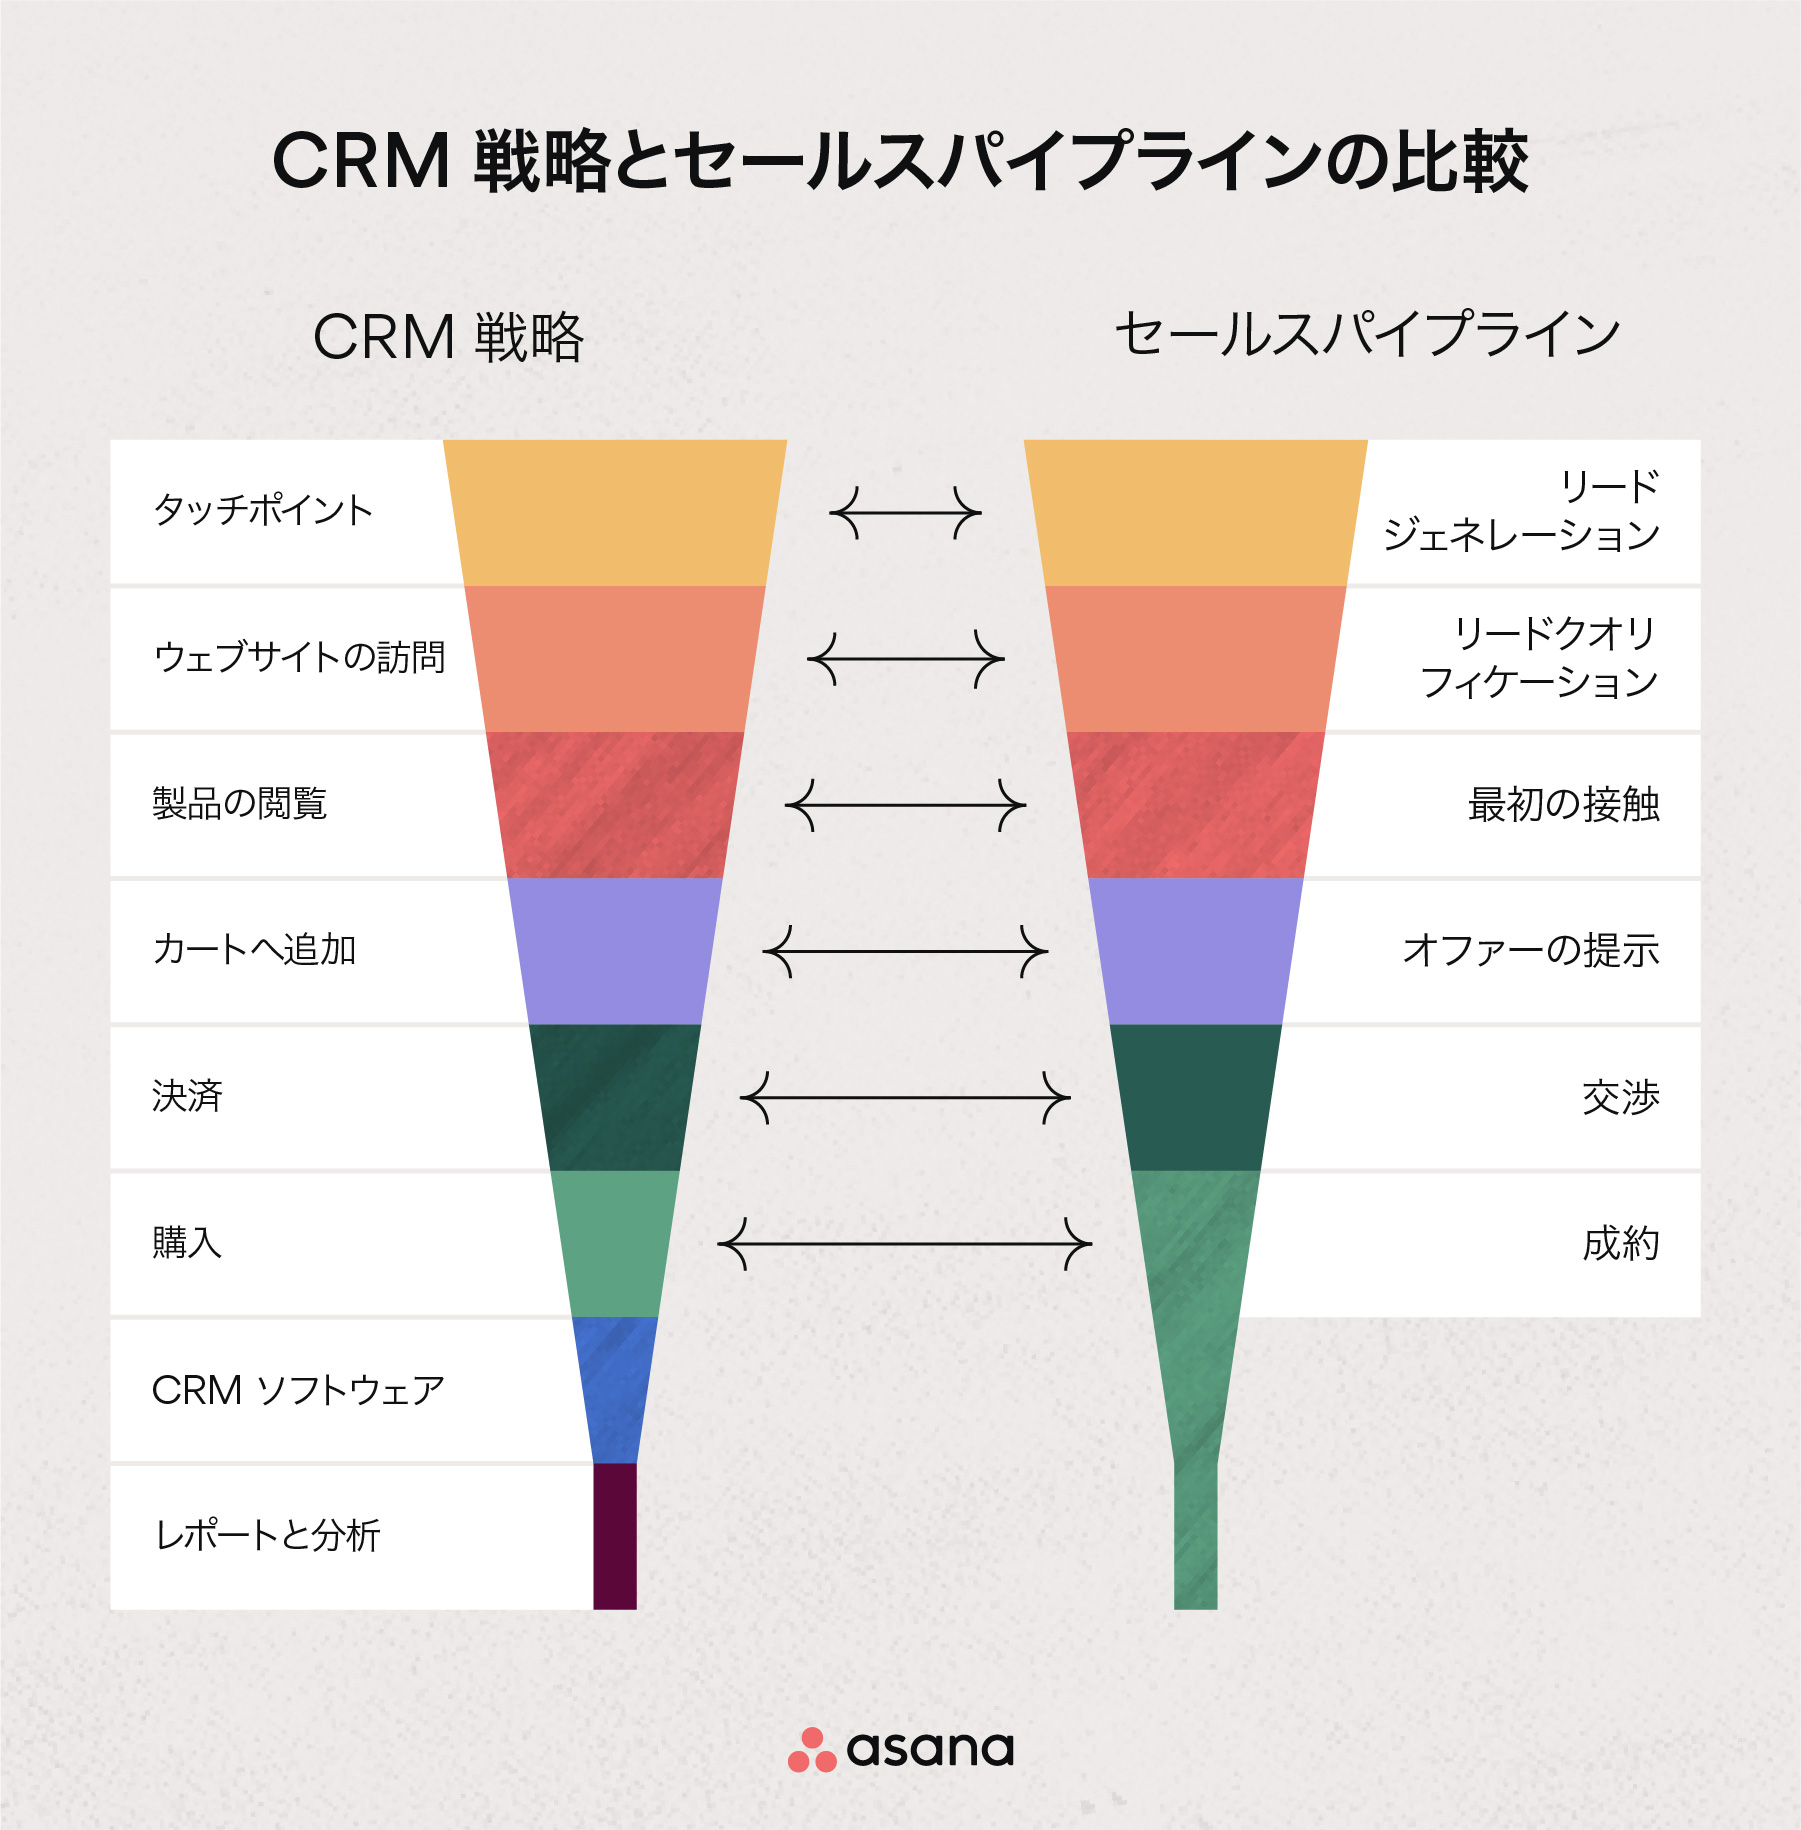 CRM 戦略とセールスパイプラインの比較